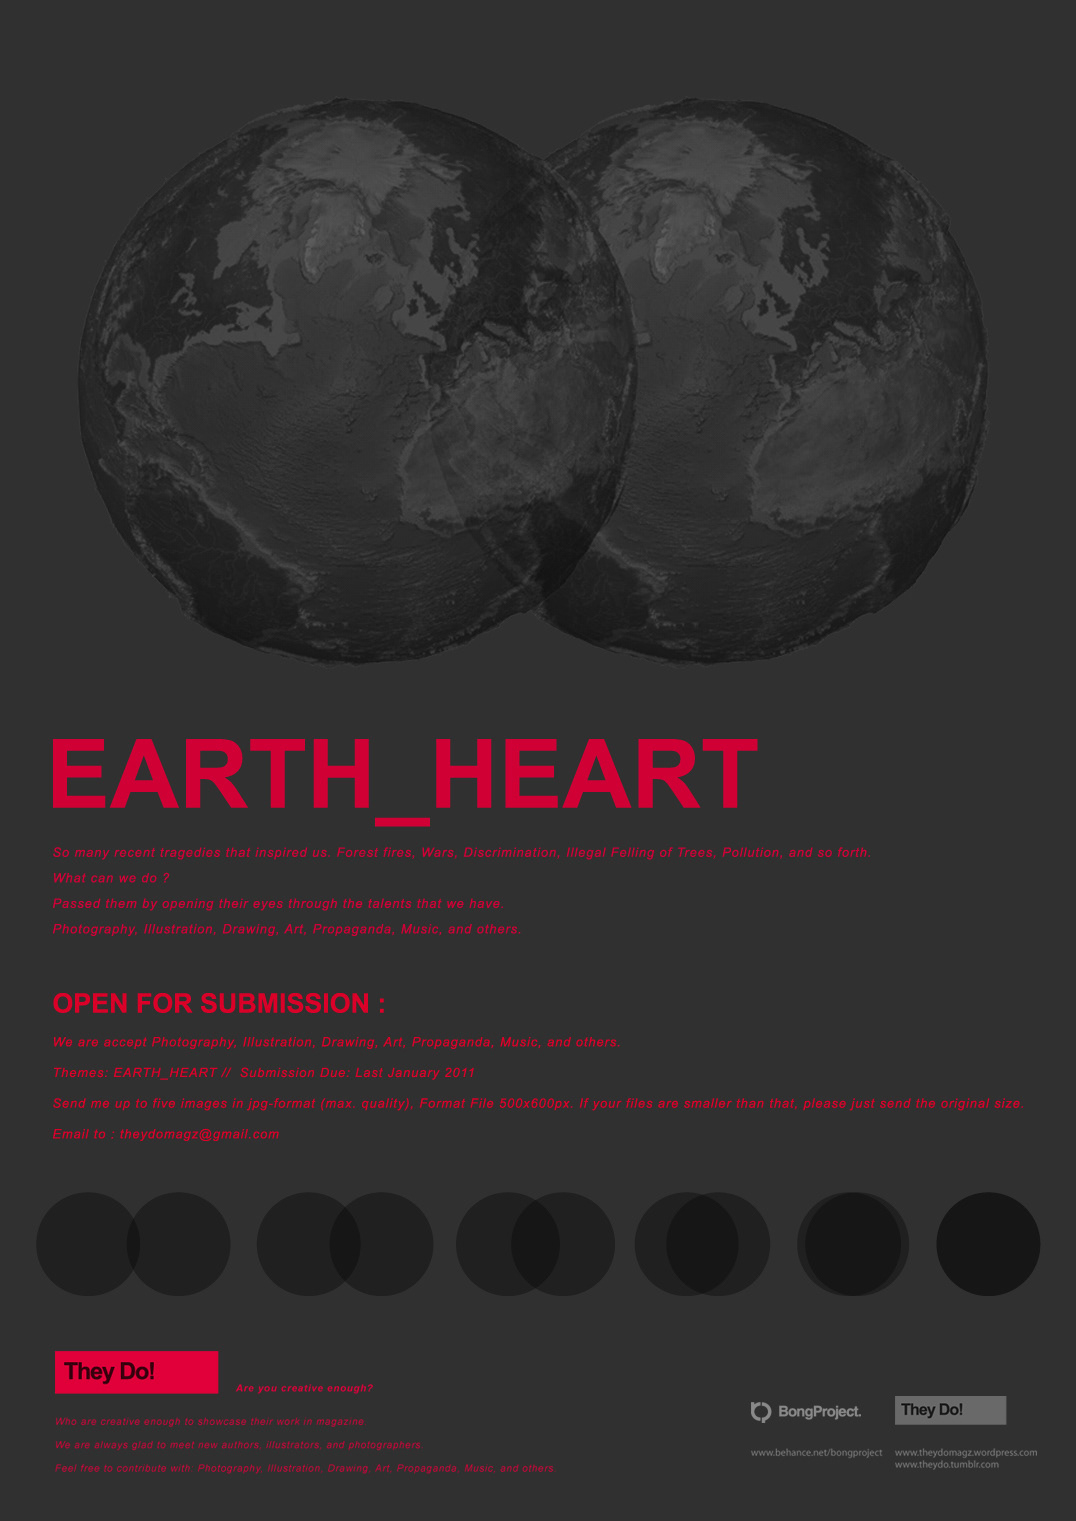 magazine they do! art heart earth submission Custom showcase bong project poems text Propaganda